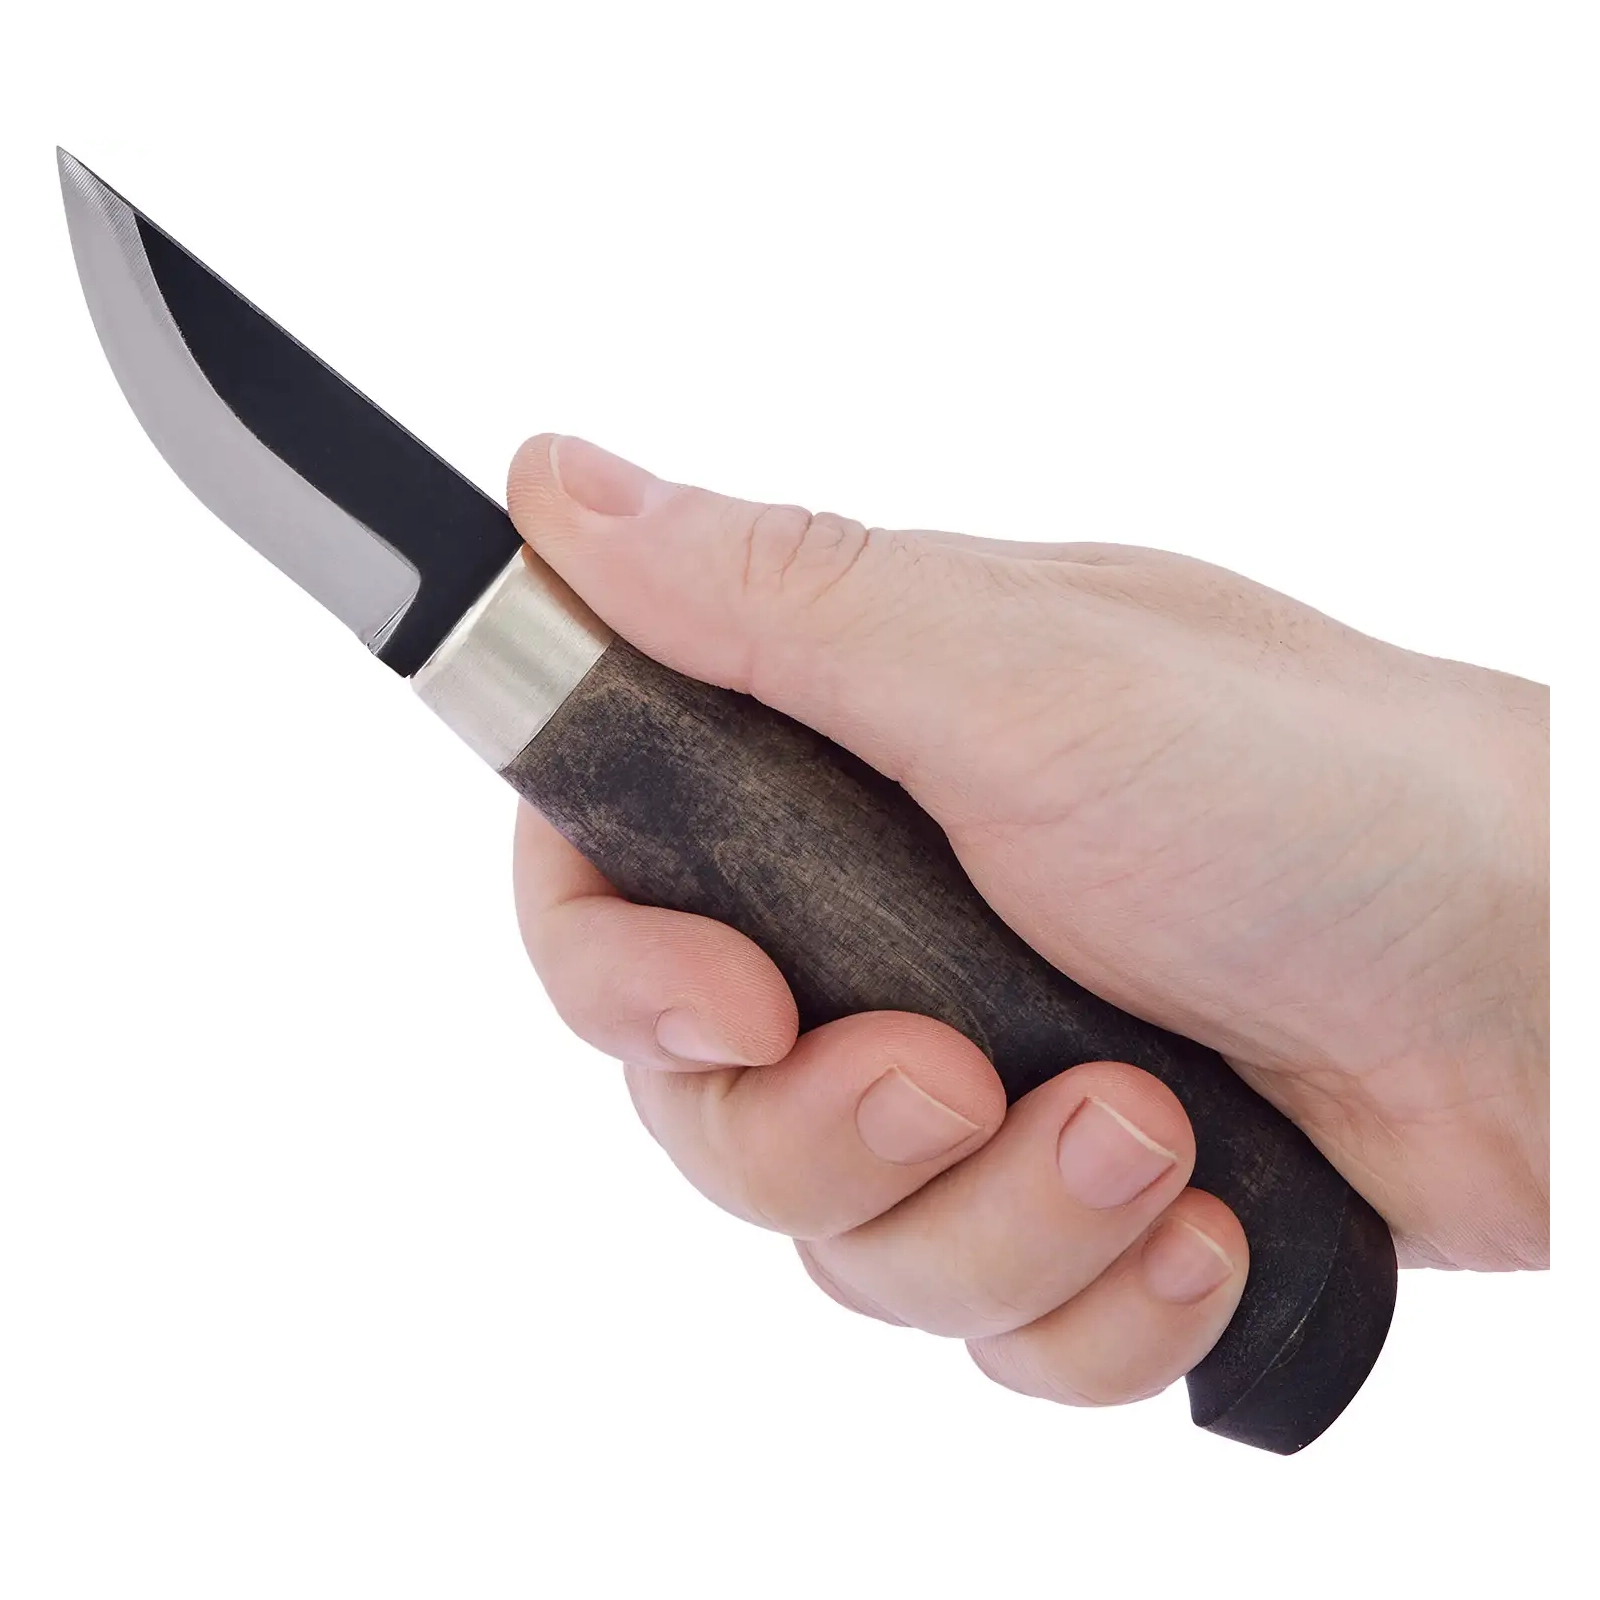 Нож Marttiini Snappy (511020) изображение 5